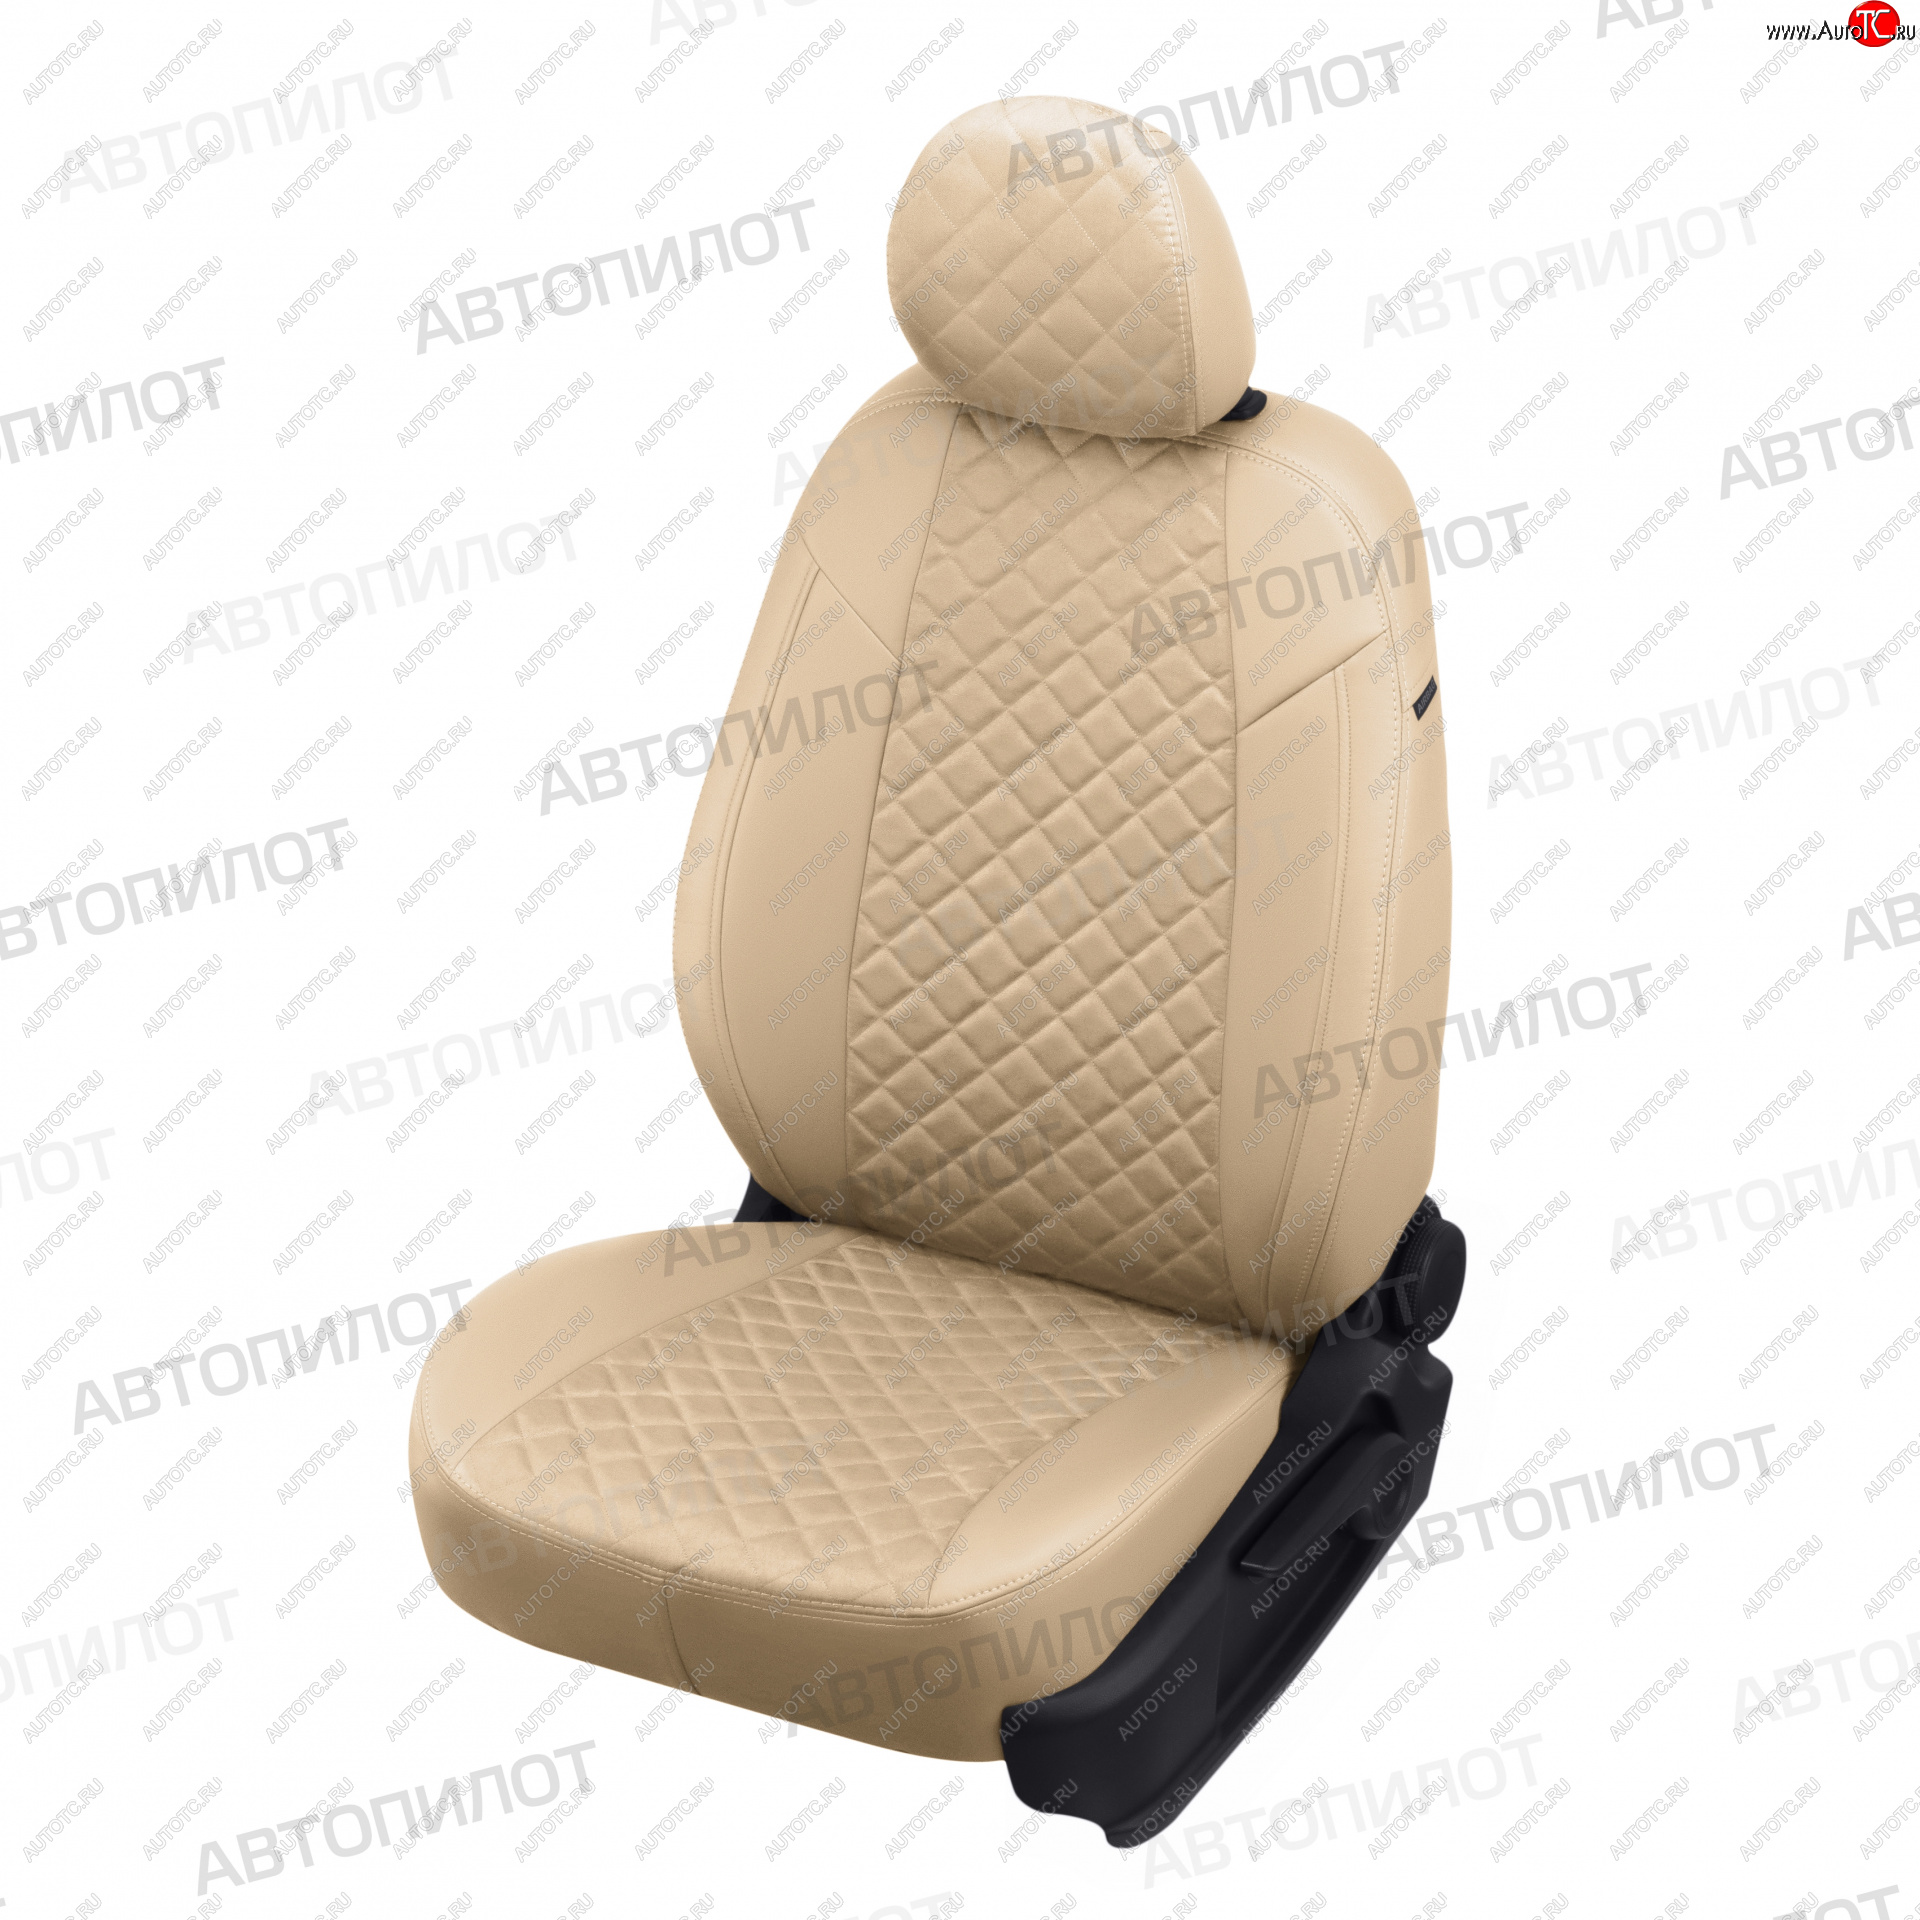 13 999 р. Чехлы сидений (экокожа/алькантара) Автопилот Ромб  Hyundai Sonata  NF (2004-2010) (бежевый)